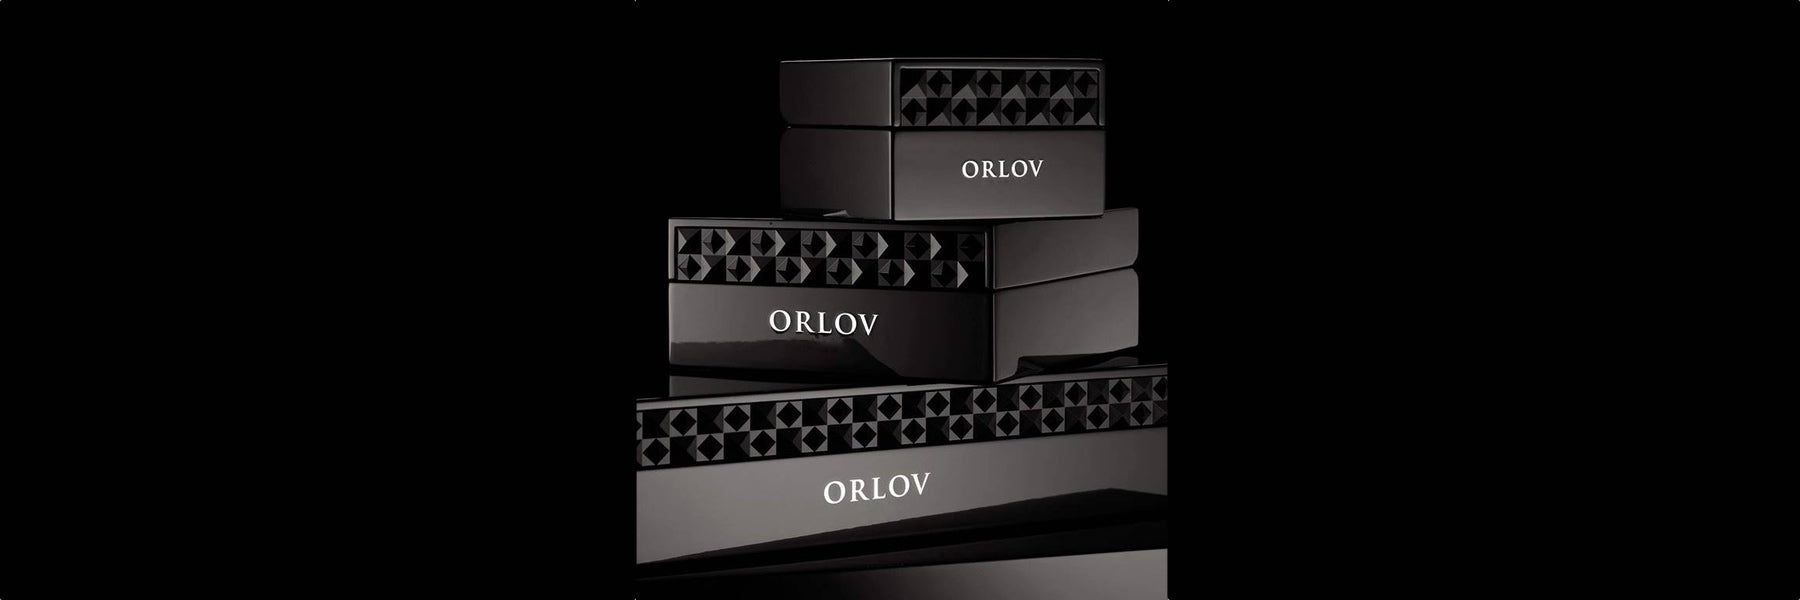 ORLOV PACKAGING BRAND BOX